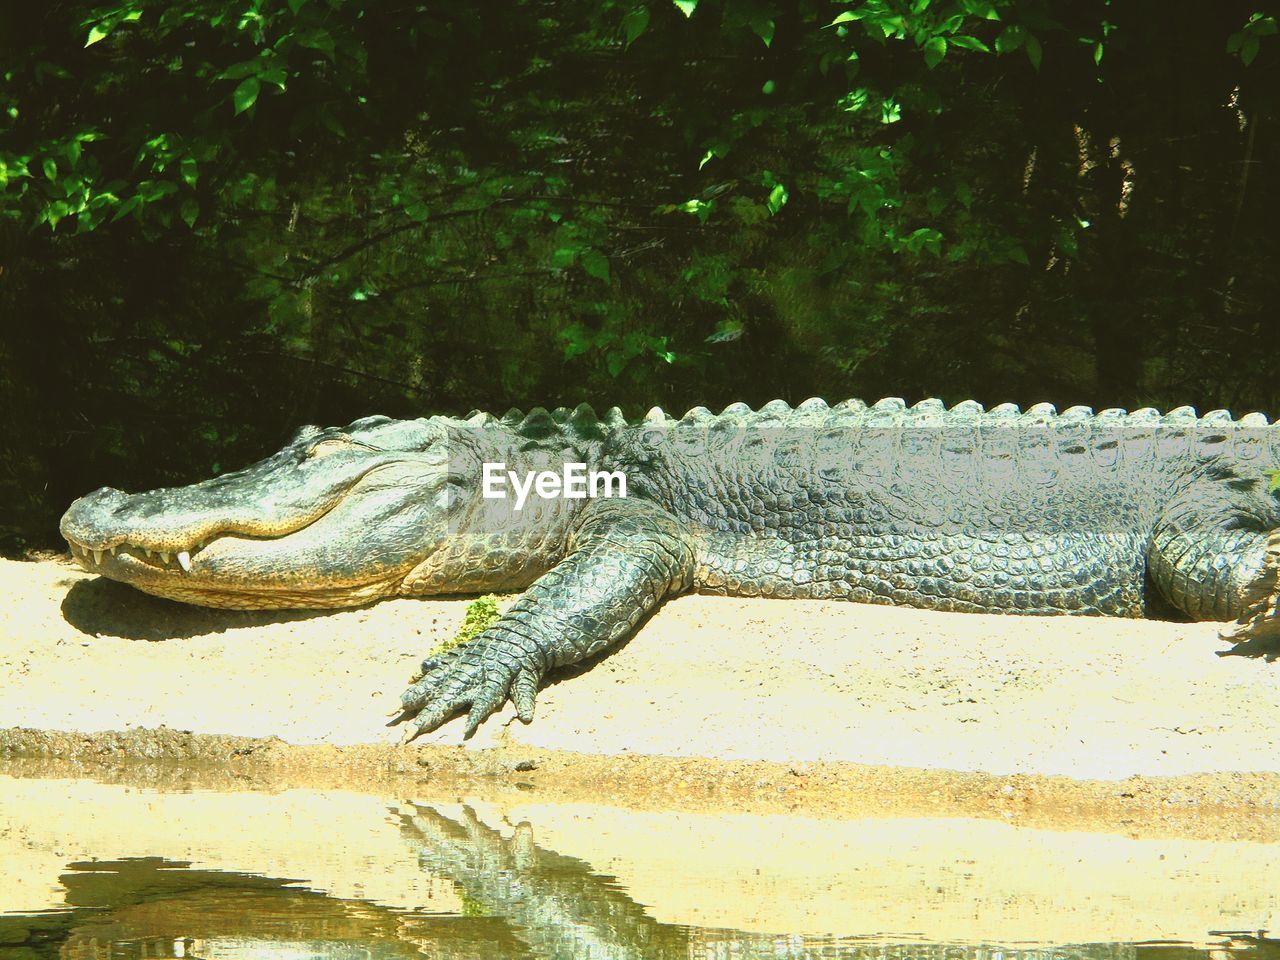 Close-up of crocodile on ground